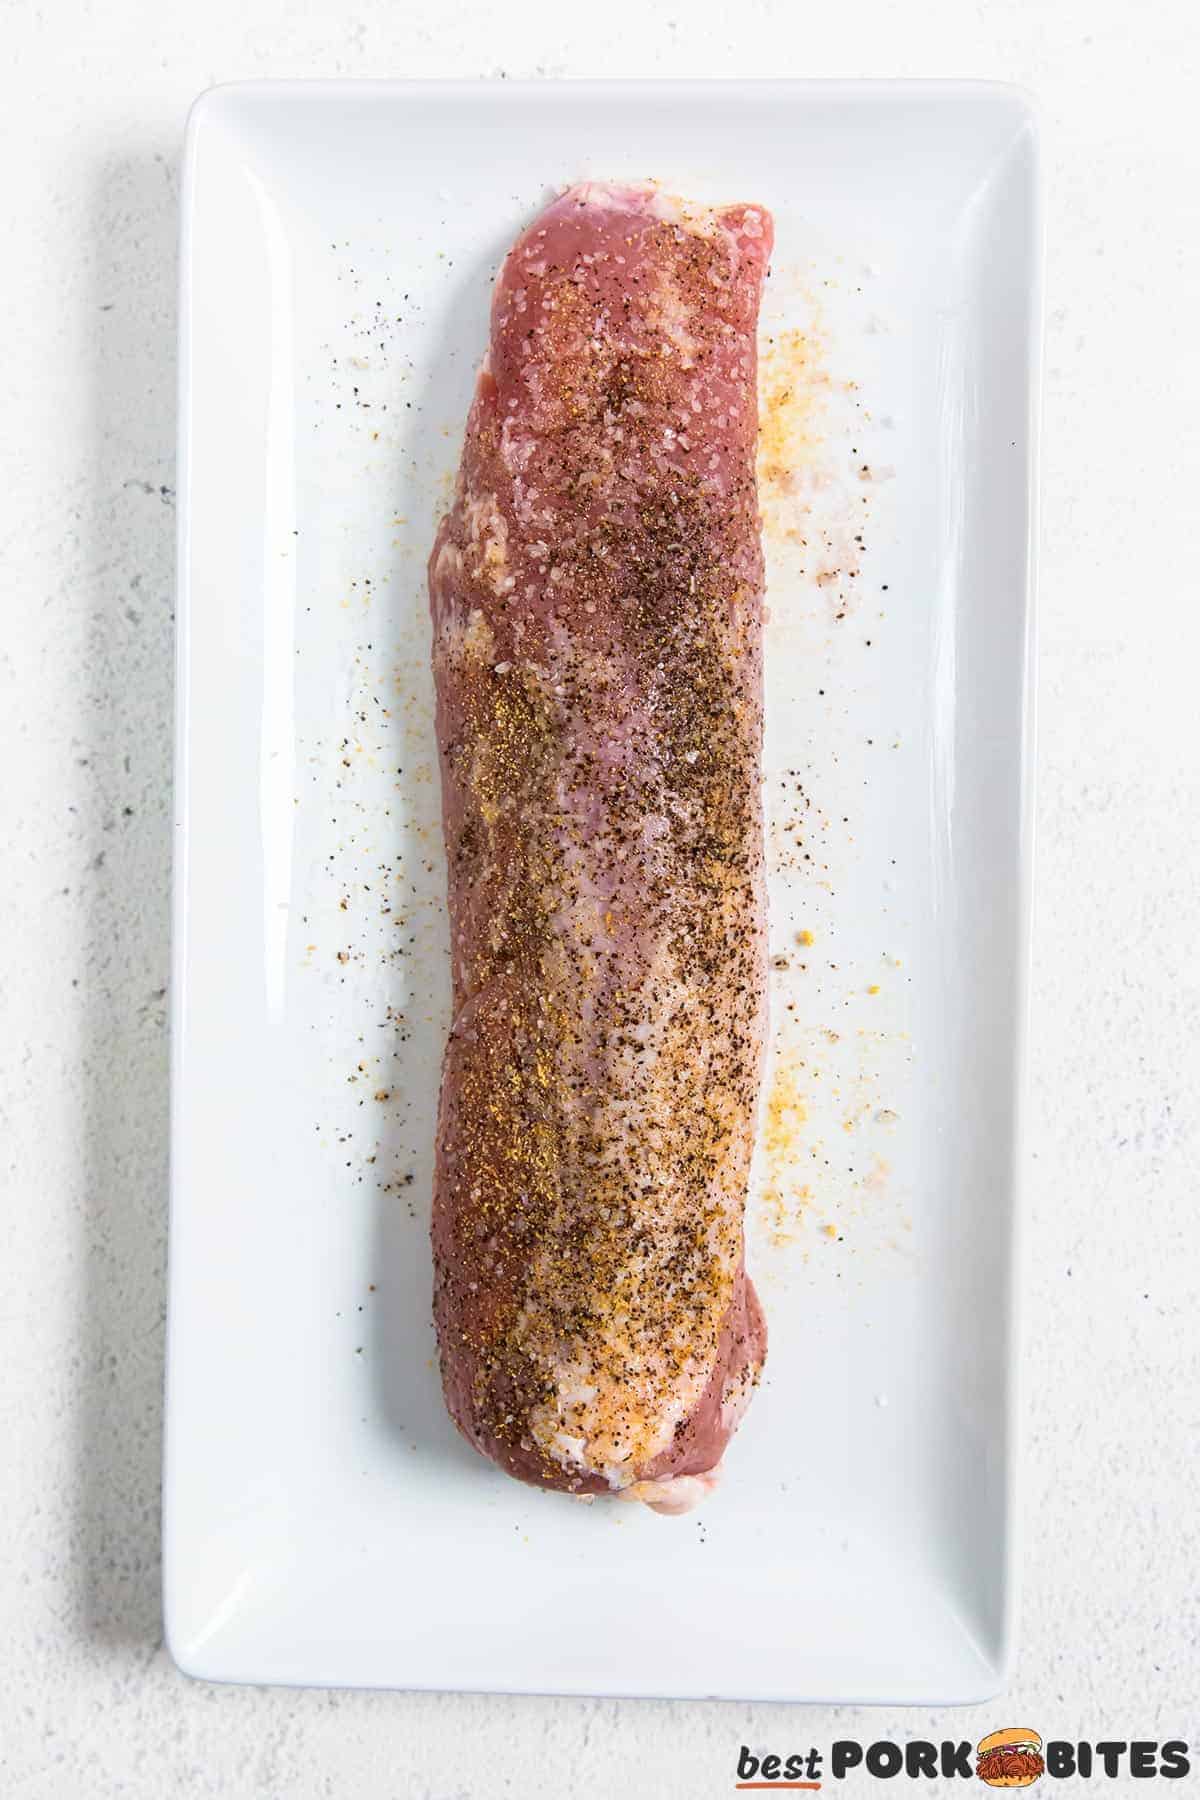 raw pork tenderloin covered in seasoning on a plate